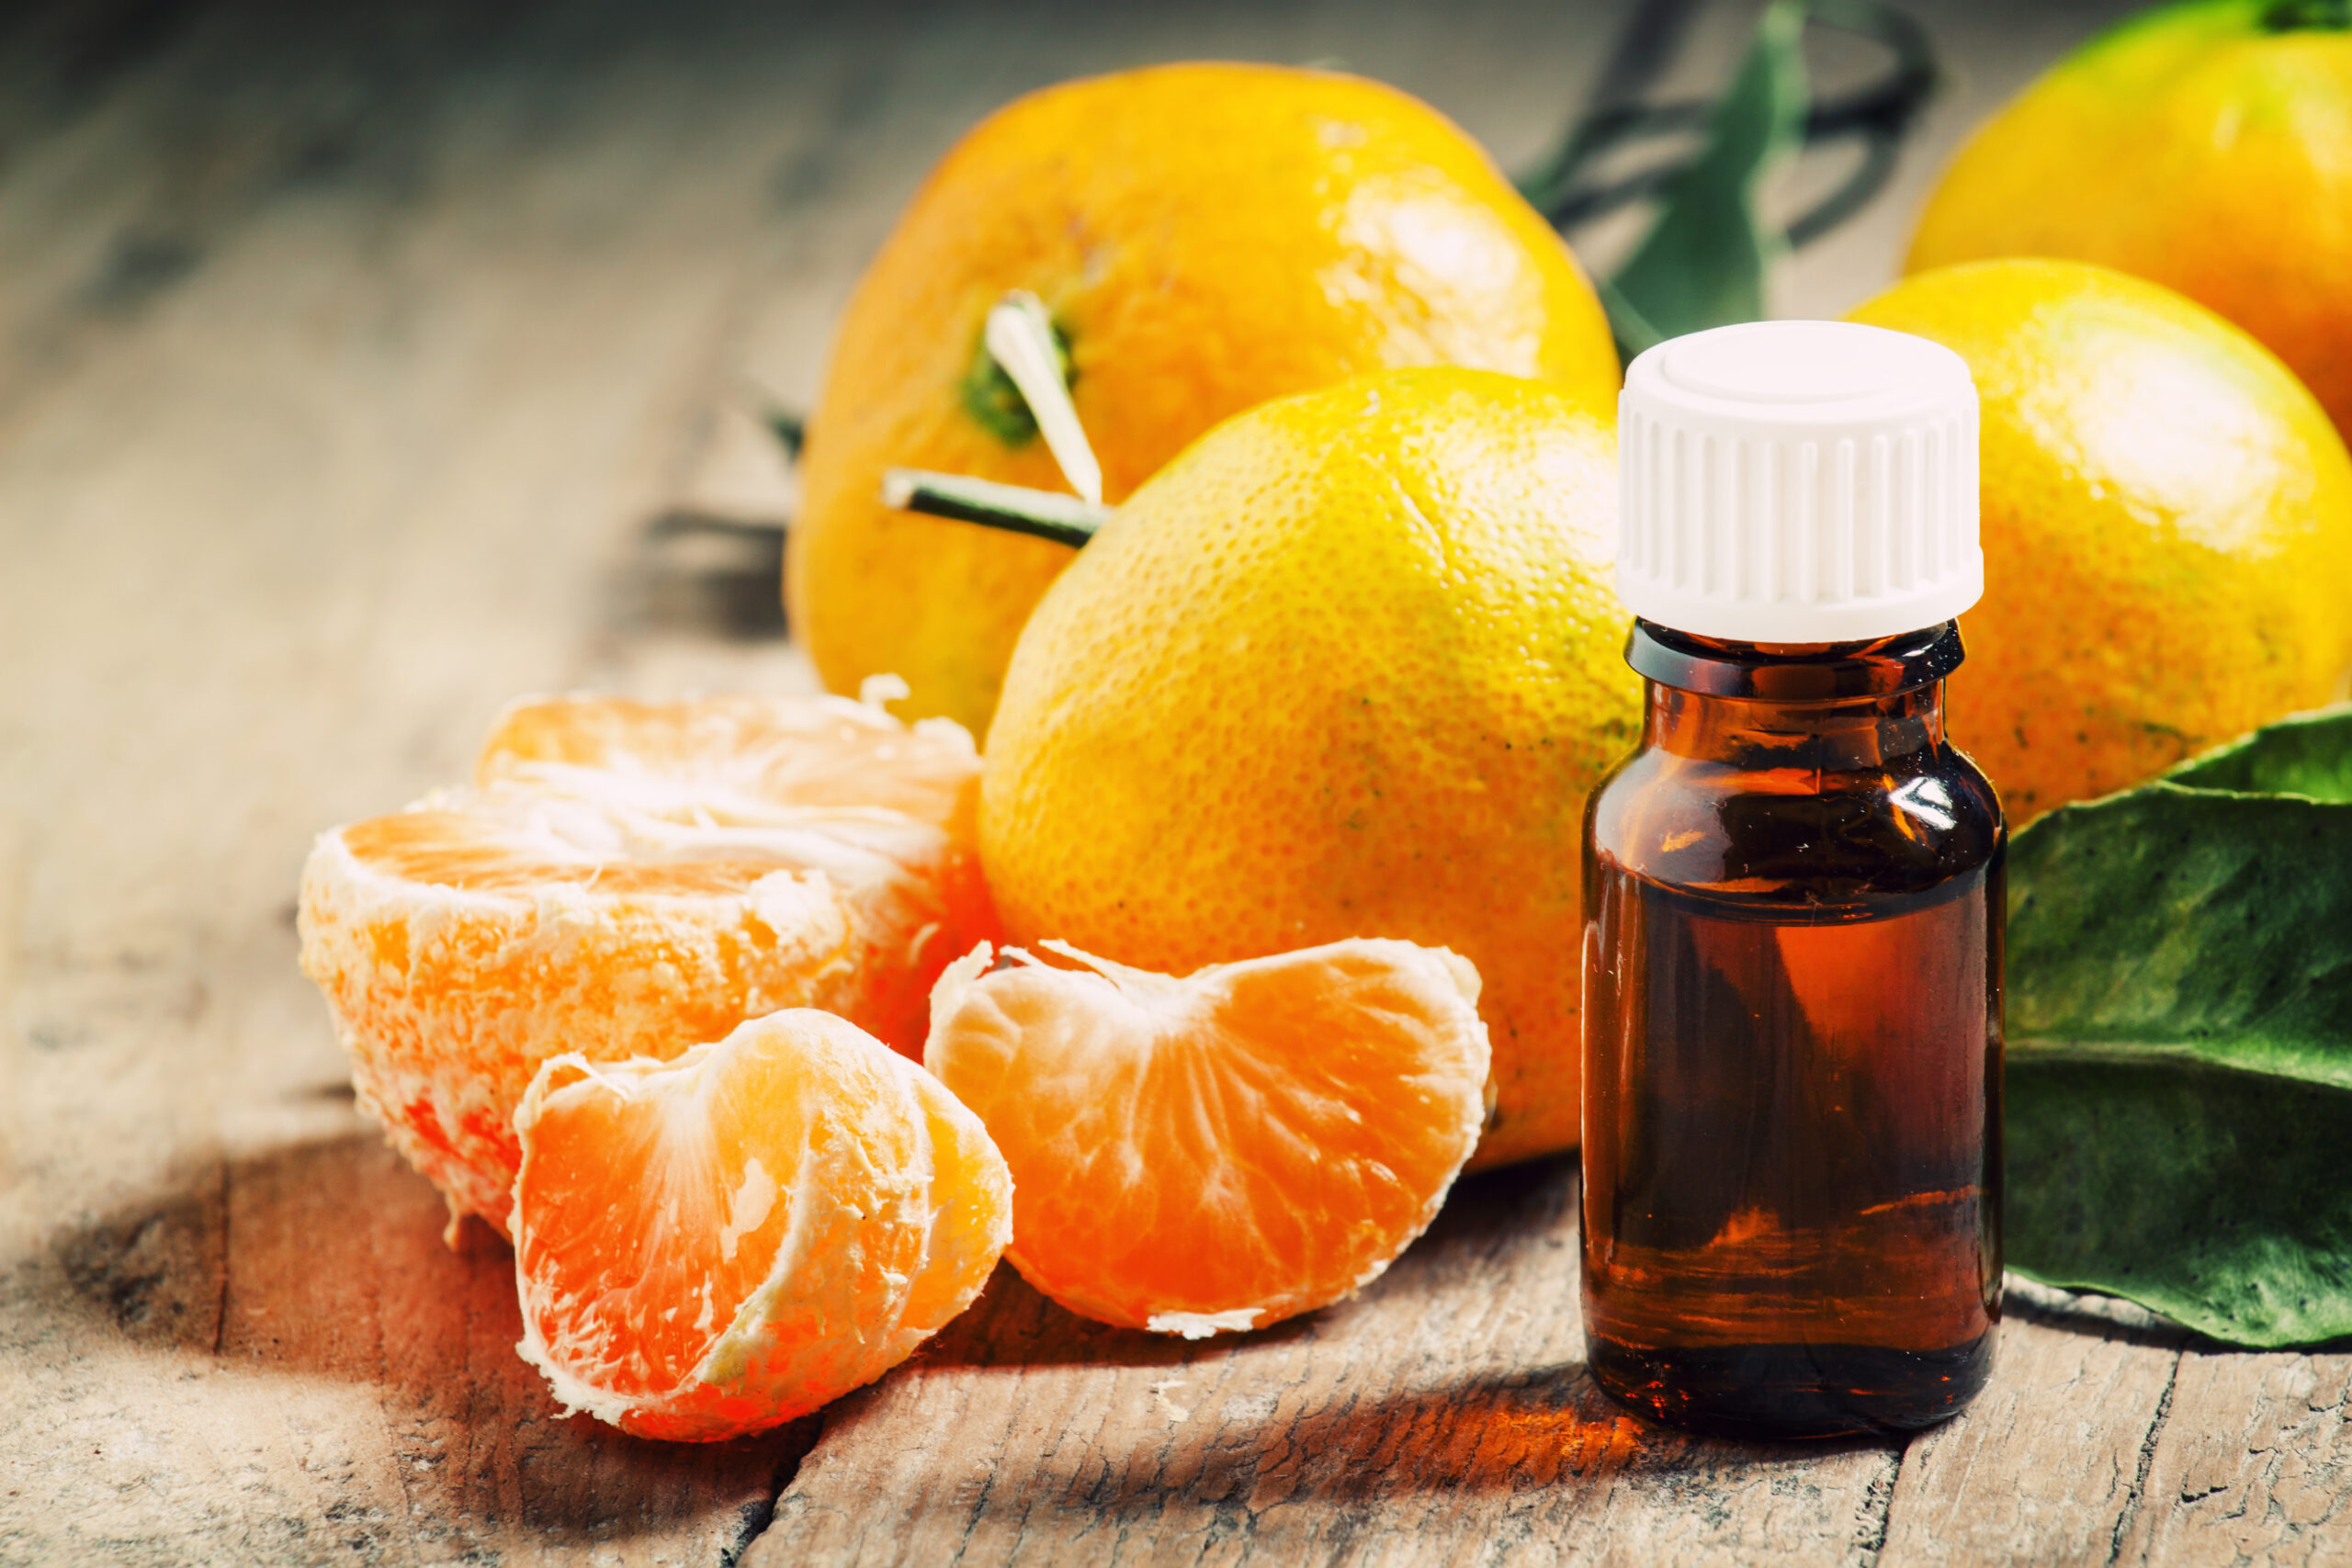 Orange slices next to a bottle of orange aromatherapy massage oil.